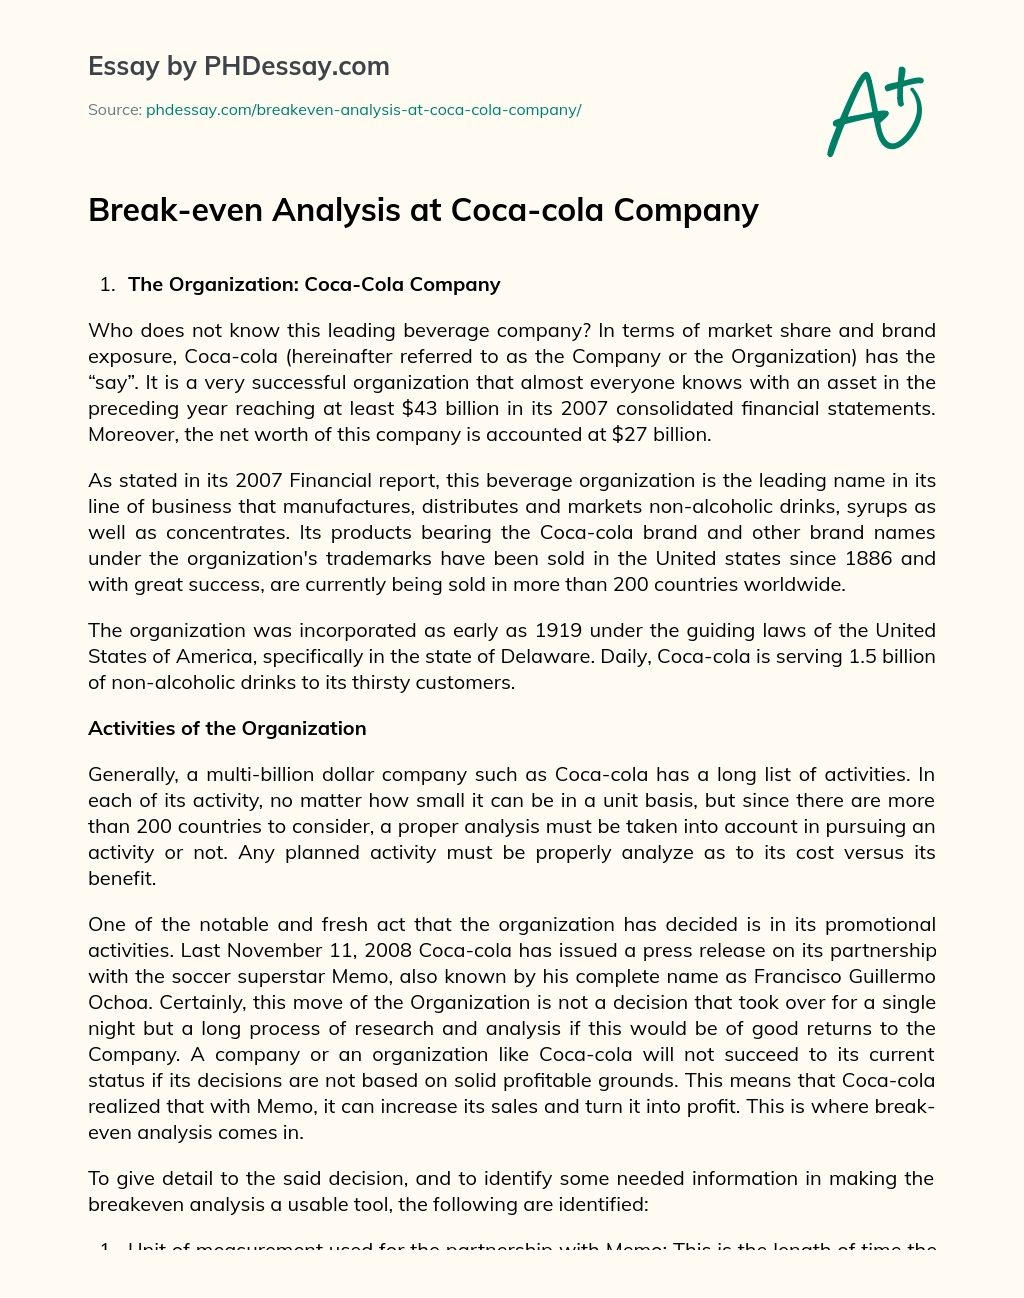 Break-even Analysis at Coca-cola Company essay